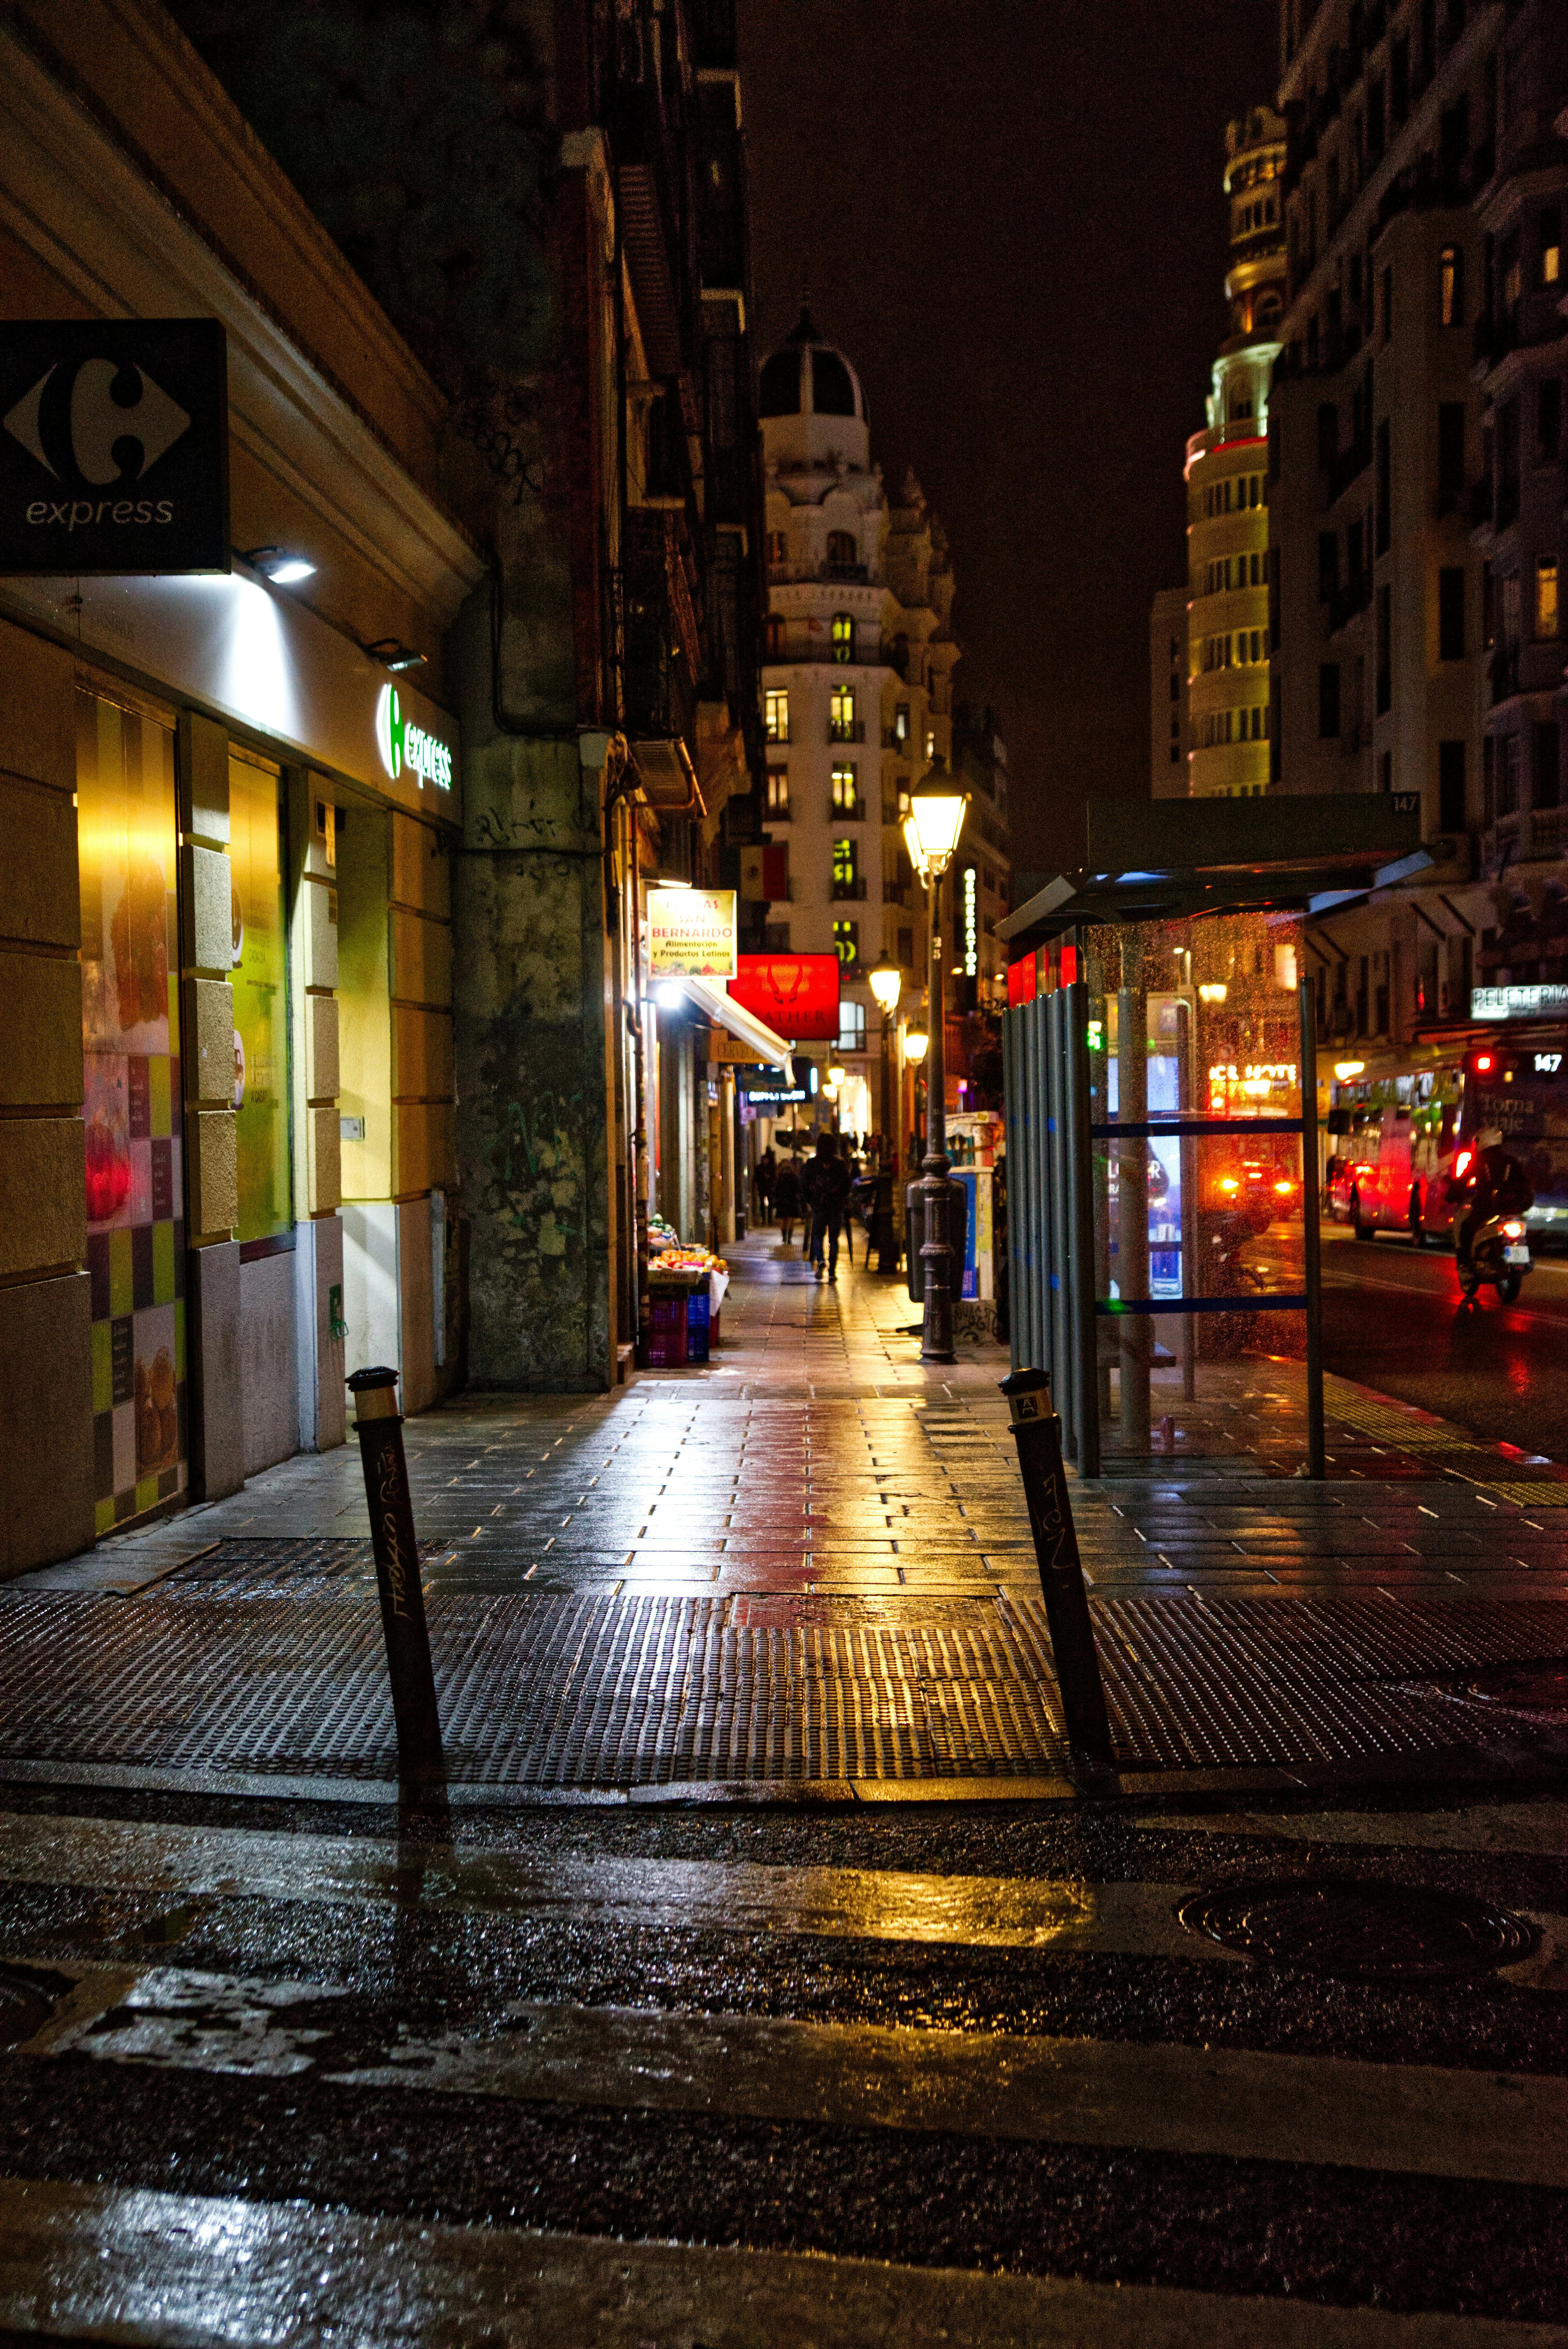 illuminated city street in rain by night